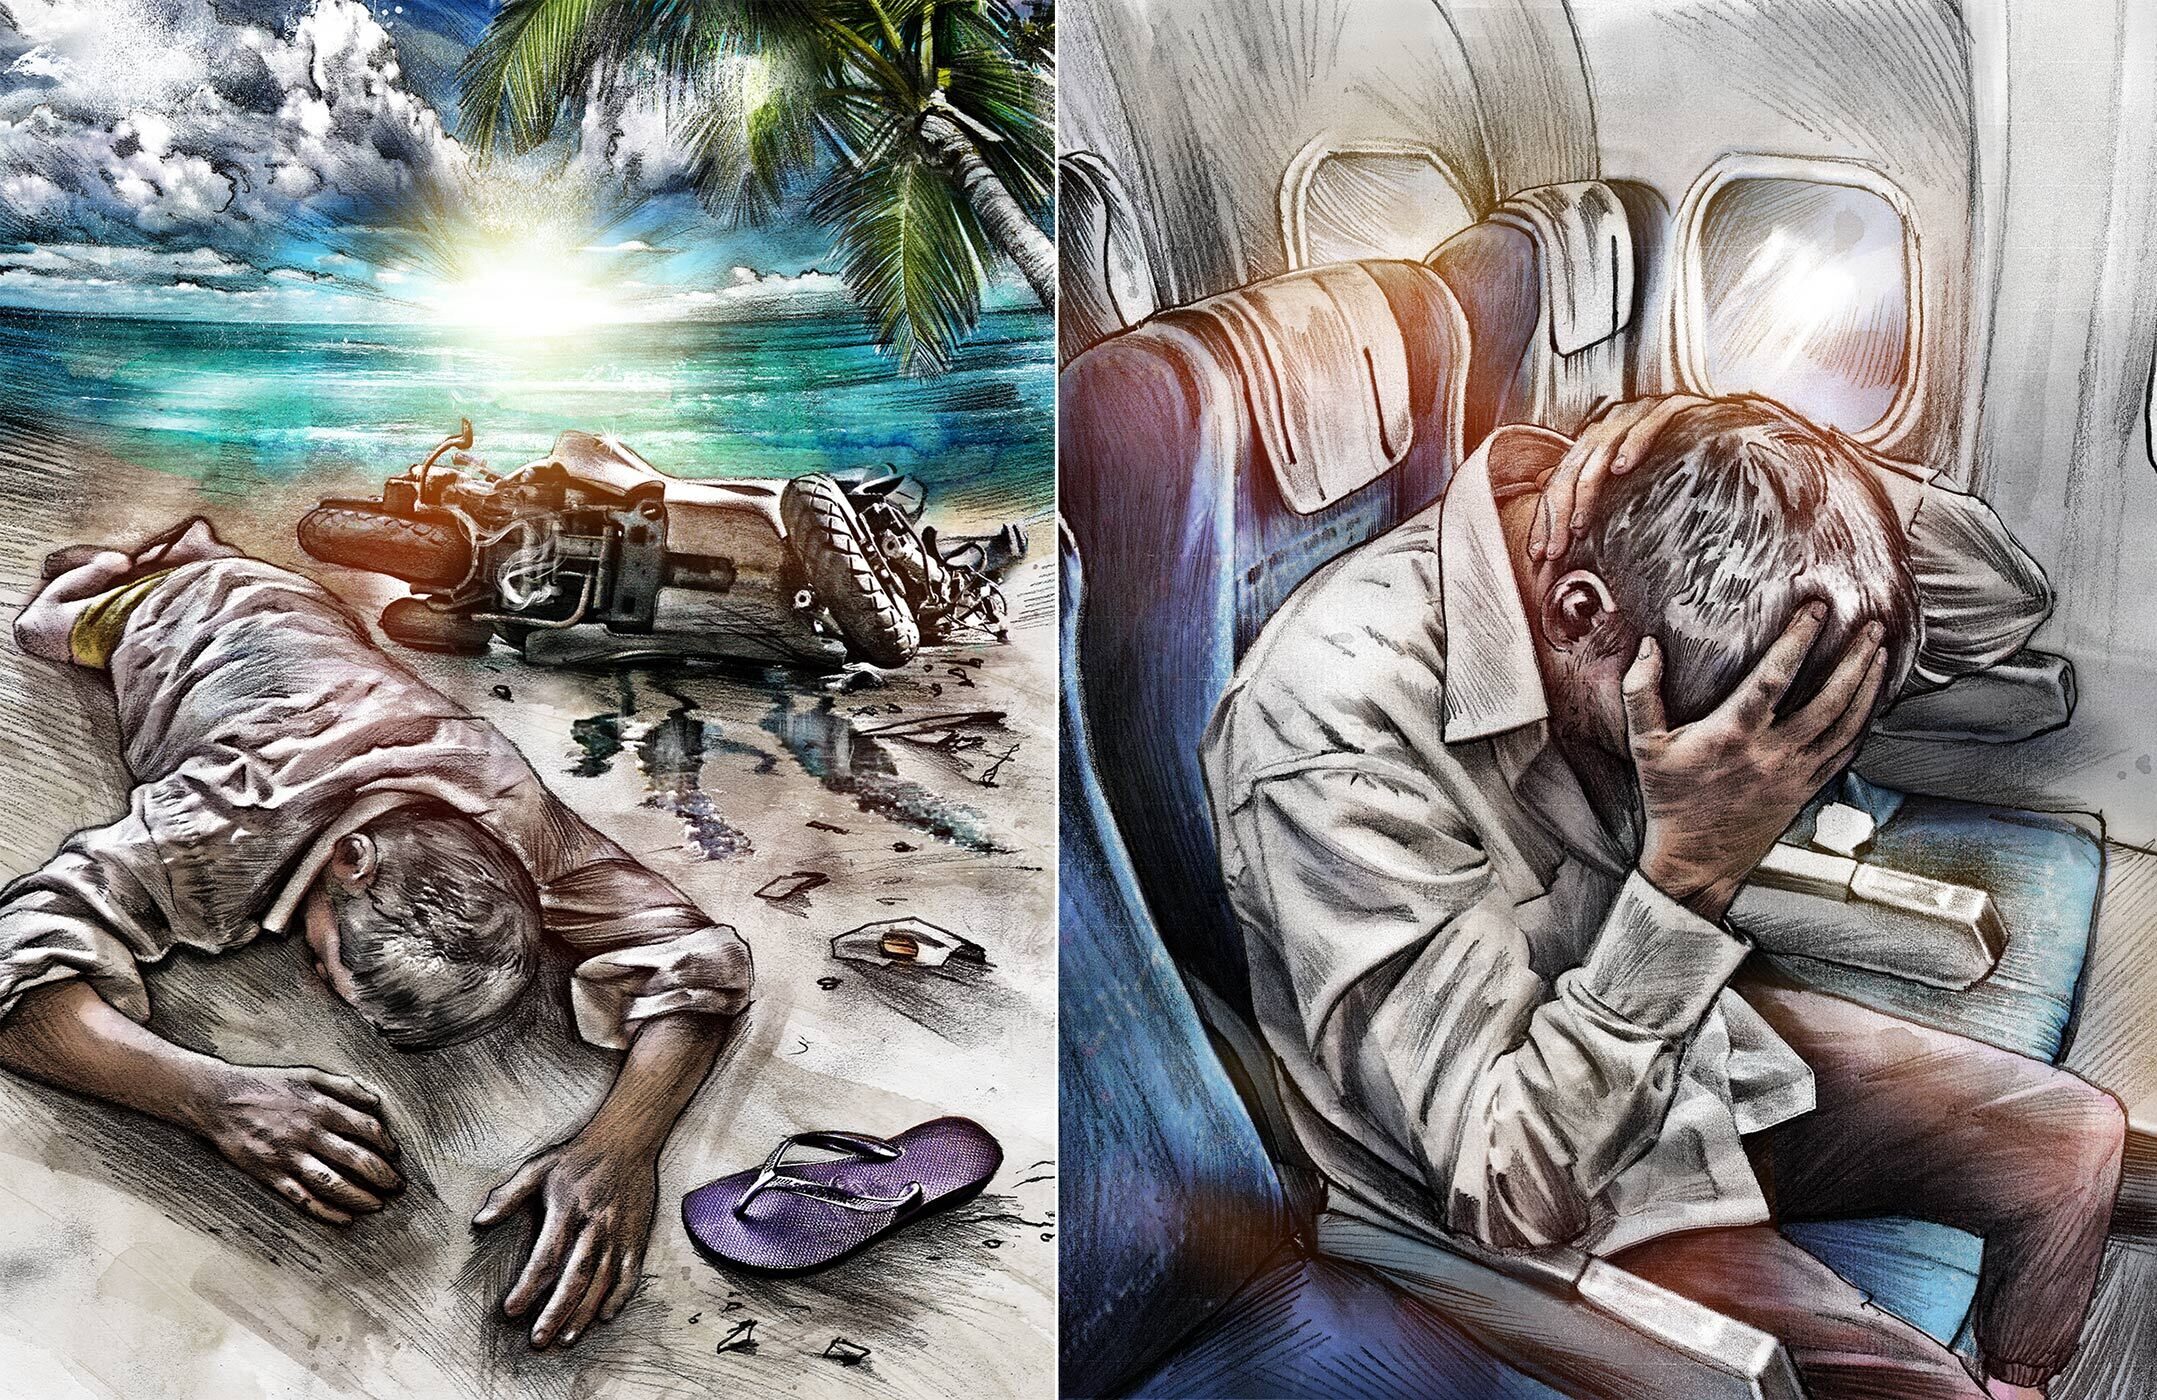 Scooter motorbike accident island flight - Kornel Illustration | Kornel Stadler portfolio